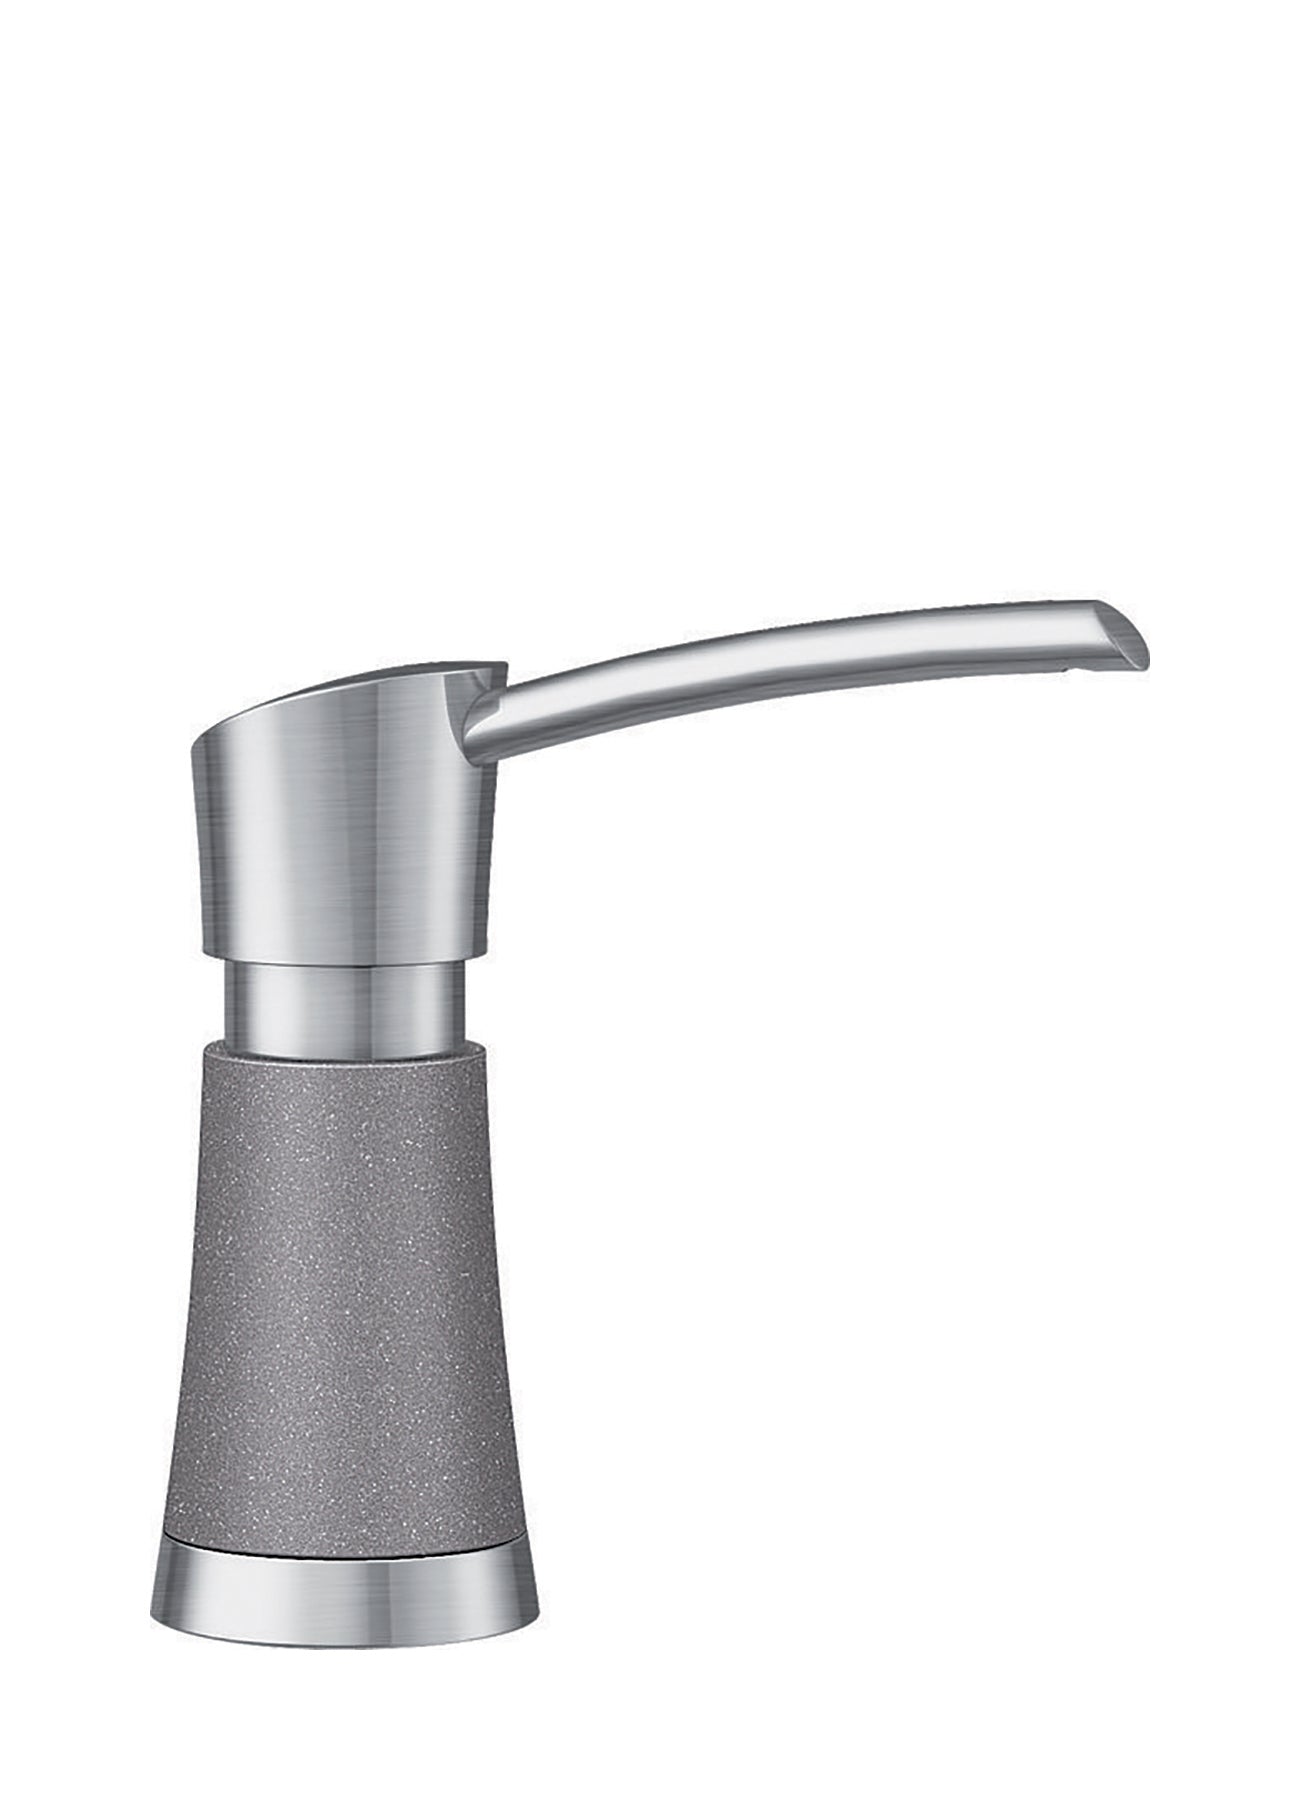 Blanco, Artona Soap Dispenser - PVD Steel/Metallic Gray